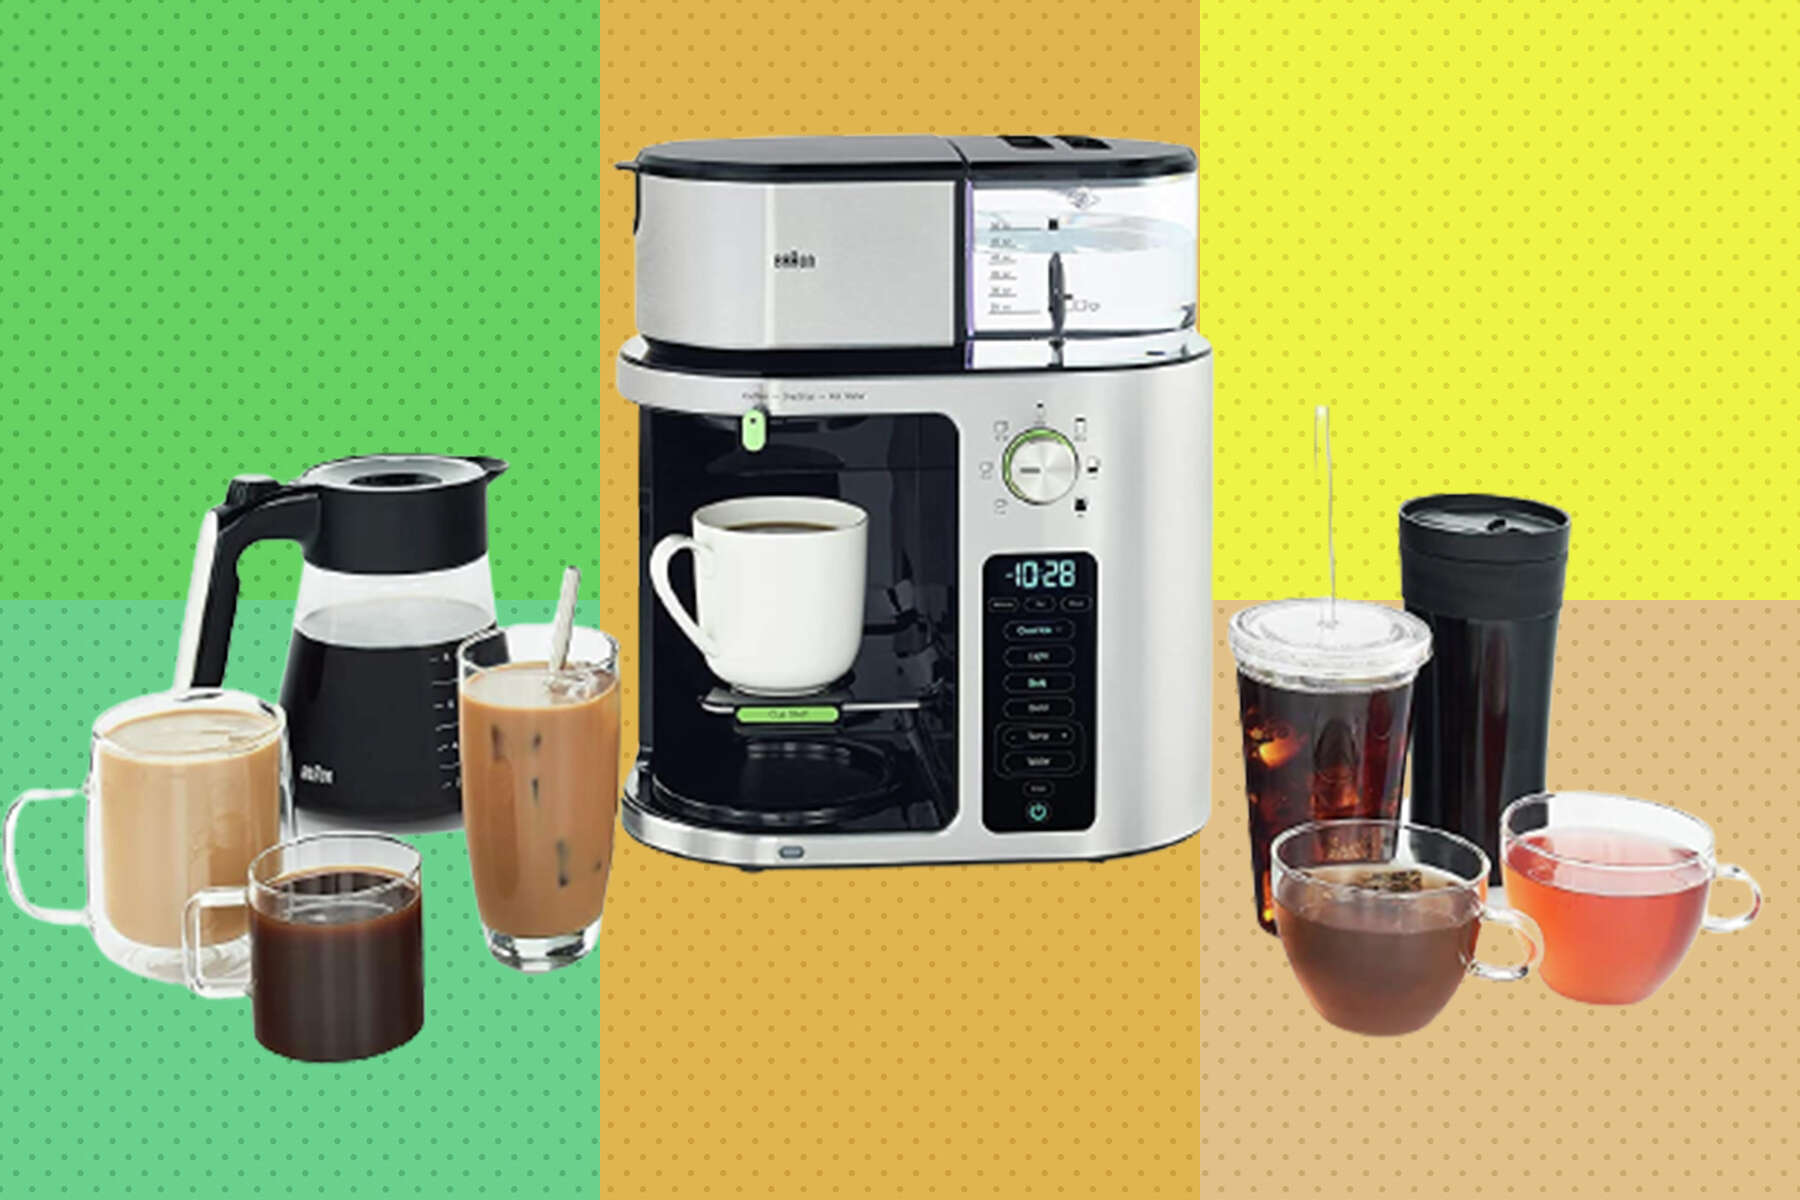 Braun MultiServe Coffee Machine - How To Prime Your Machine 